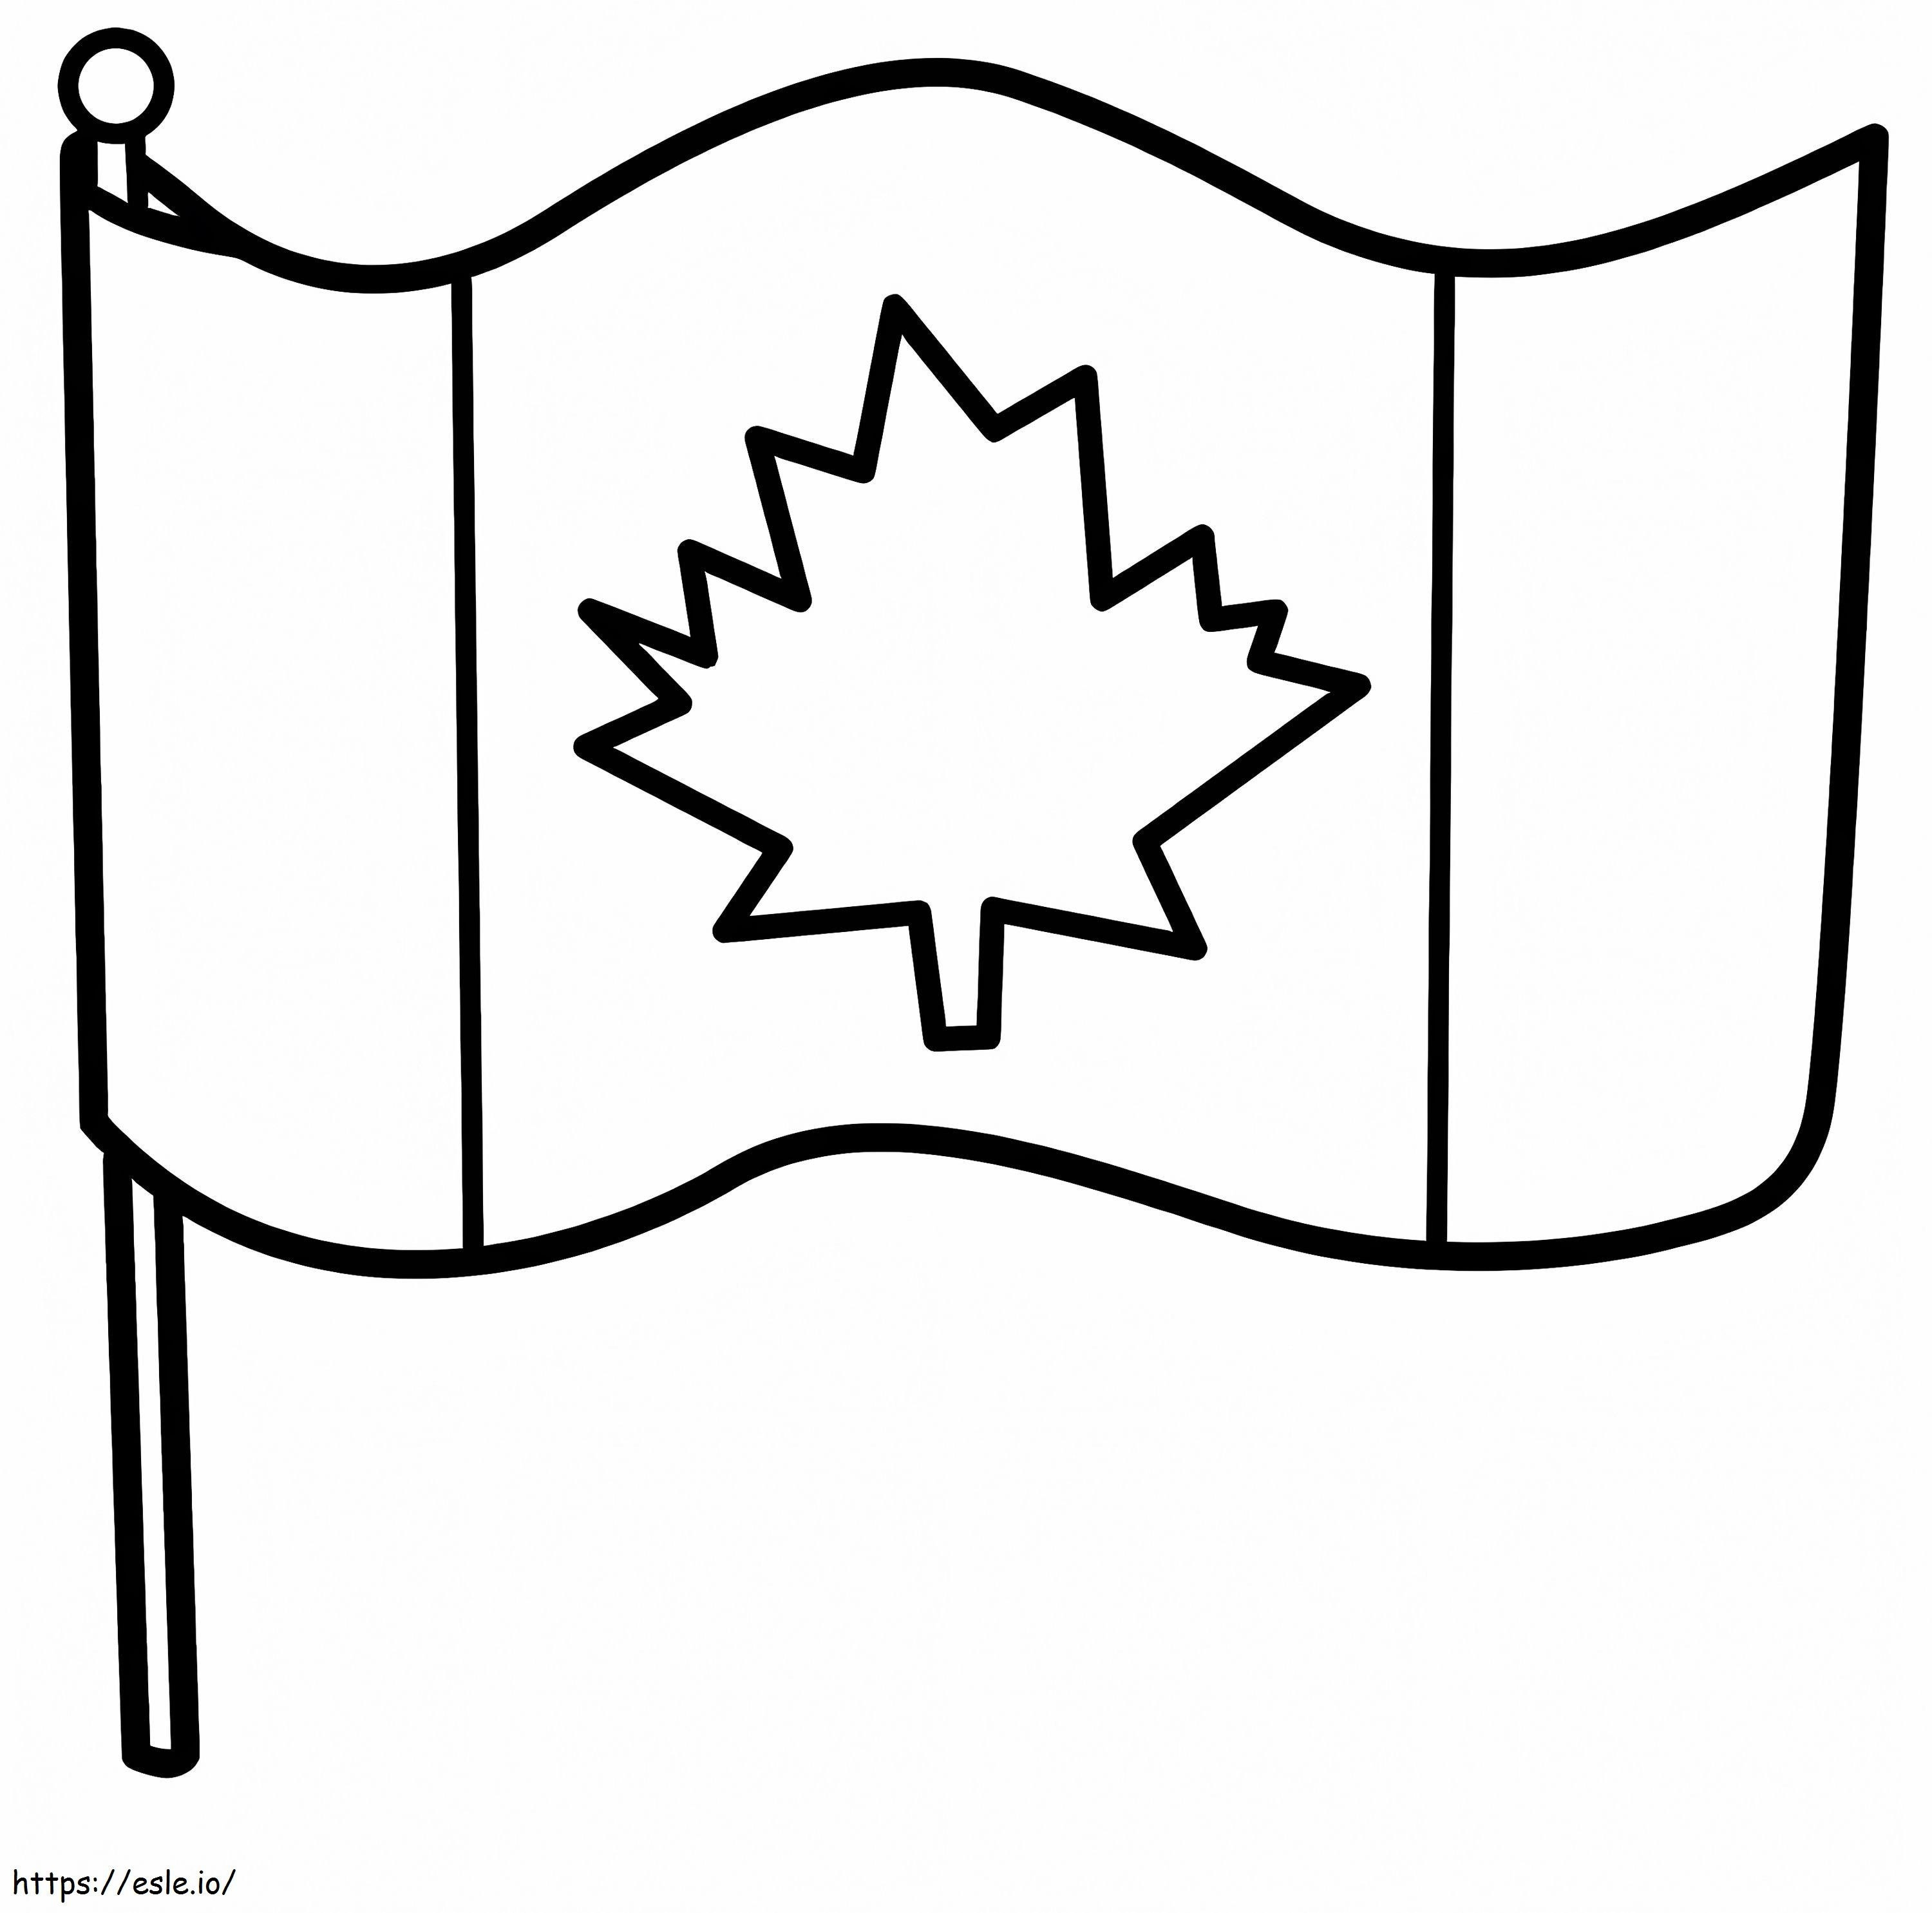 Flaga Kanady 3 kolorowanka